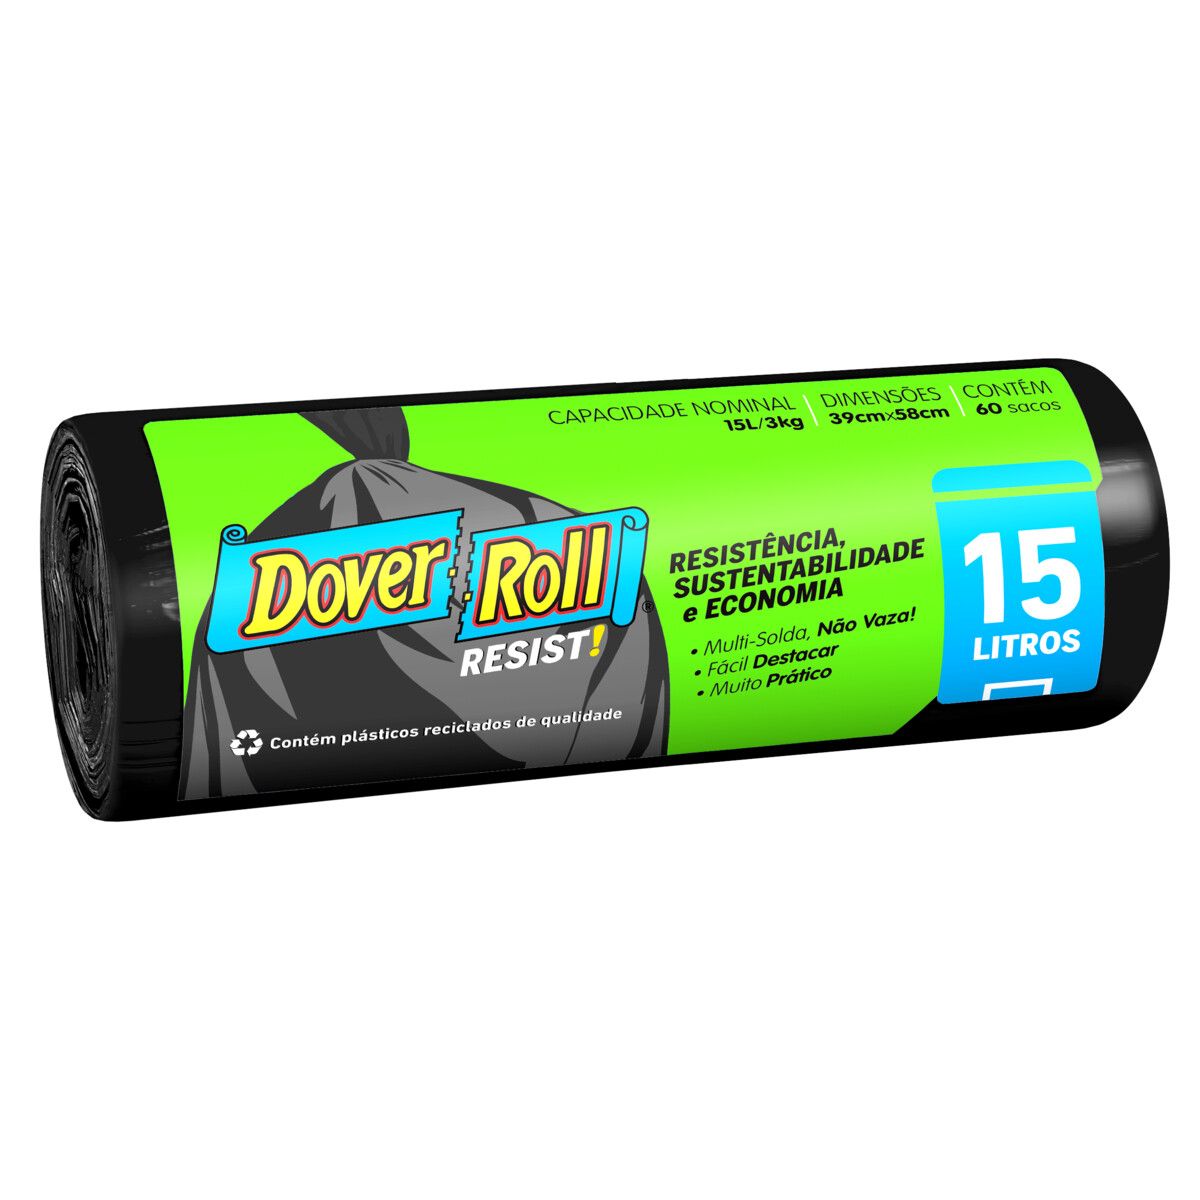 Saco para Lixo Dover Roll 15L Resist 60 Unidades image number 4